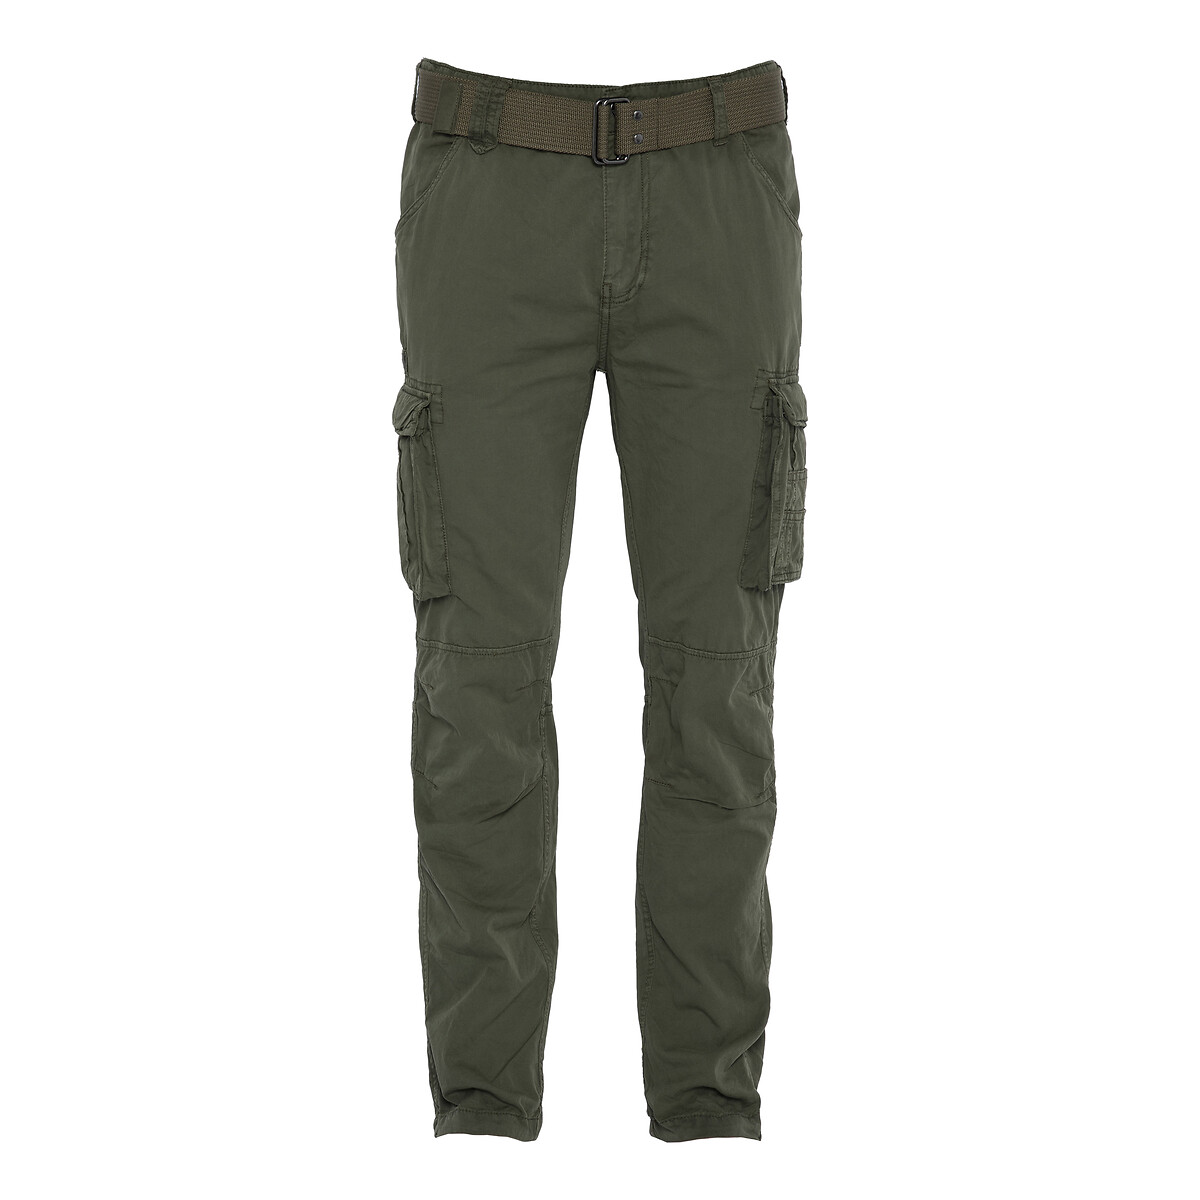 Tr ranger 70 cargo trousers in cotton with belt Schott | La Redoute